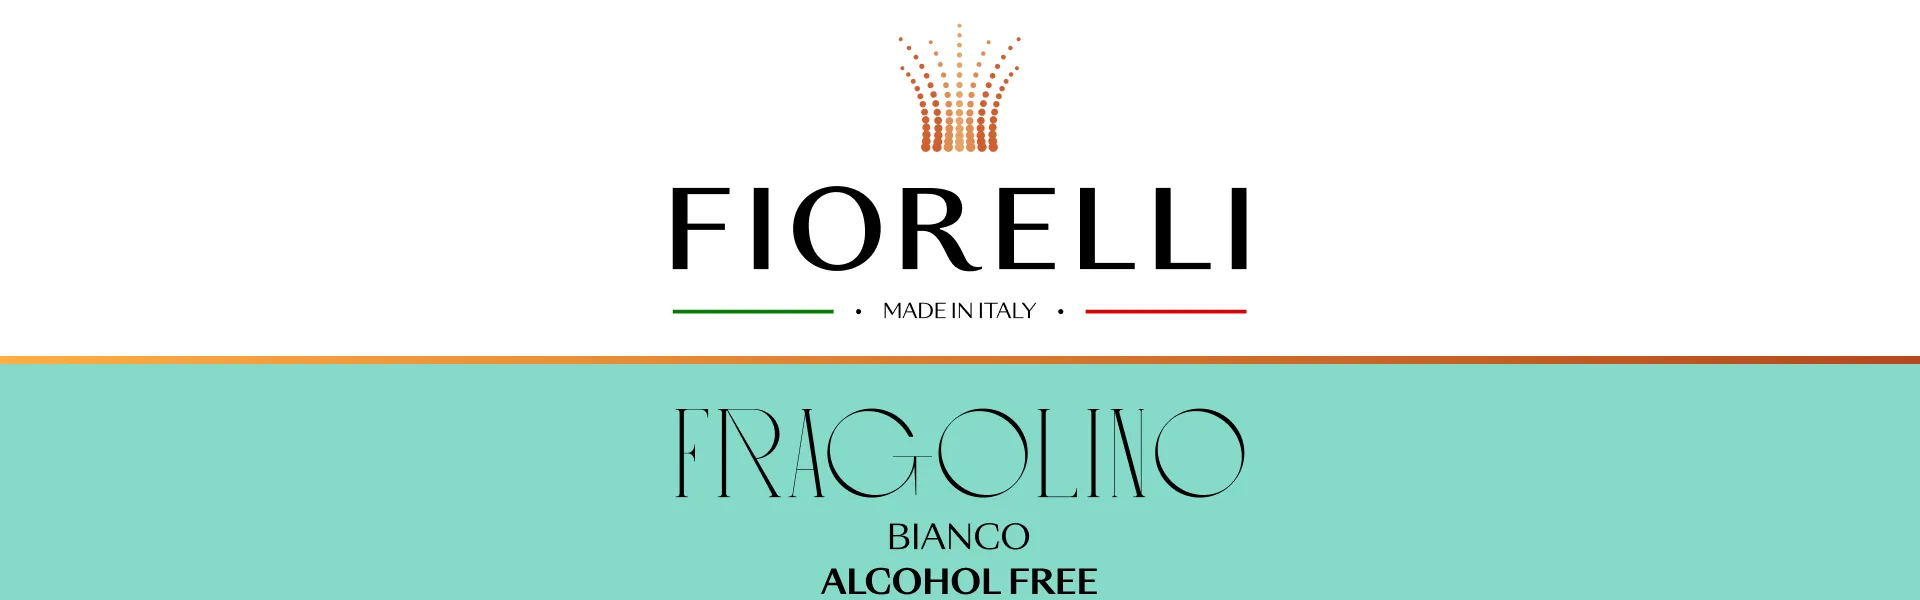 Фото 1 Fiorelli Fragolino Bianco Alcohol Free Can